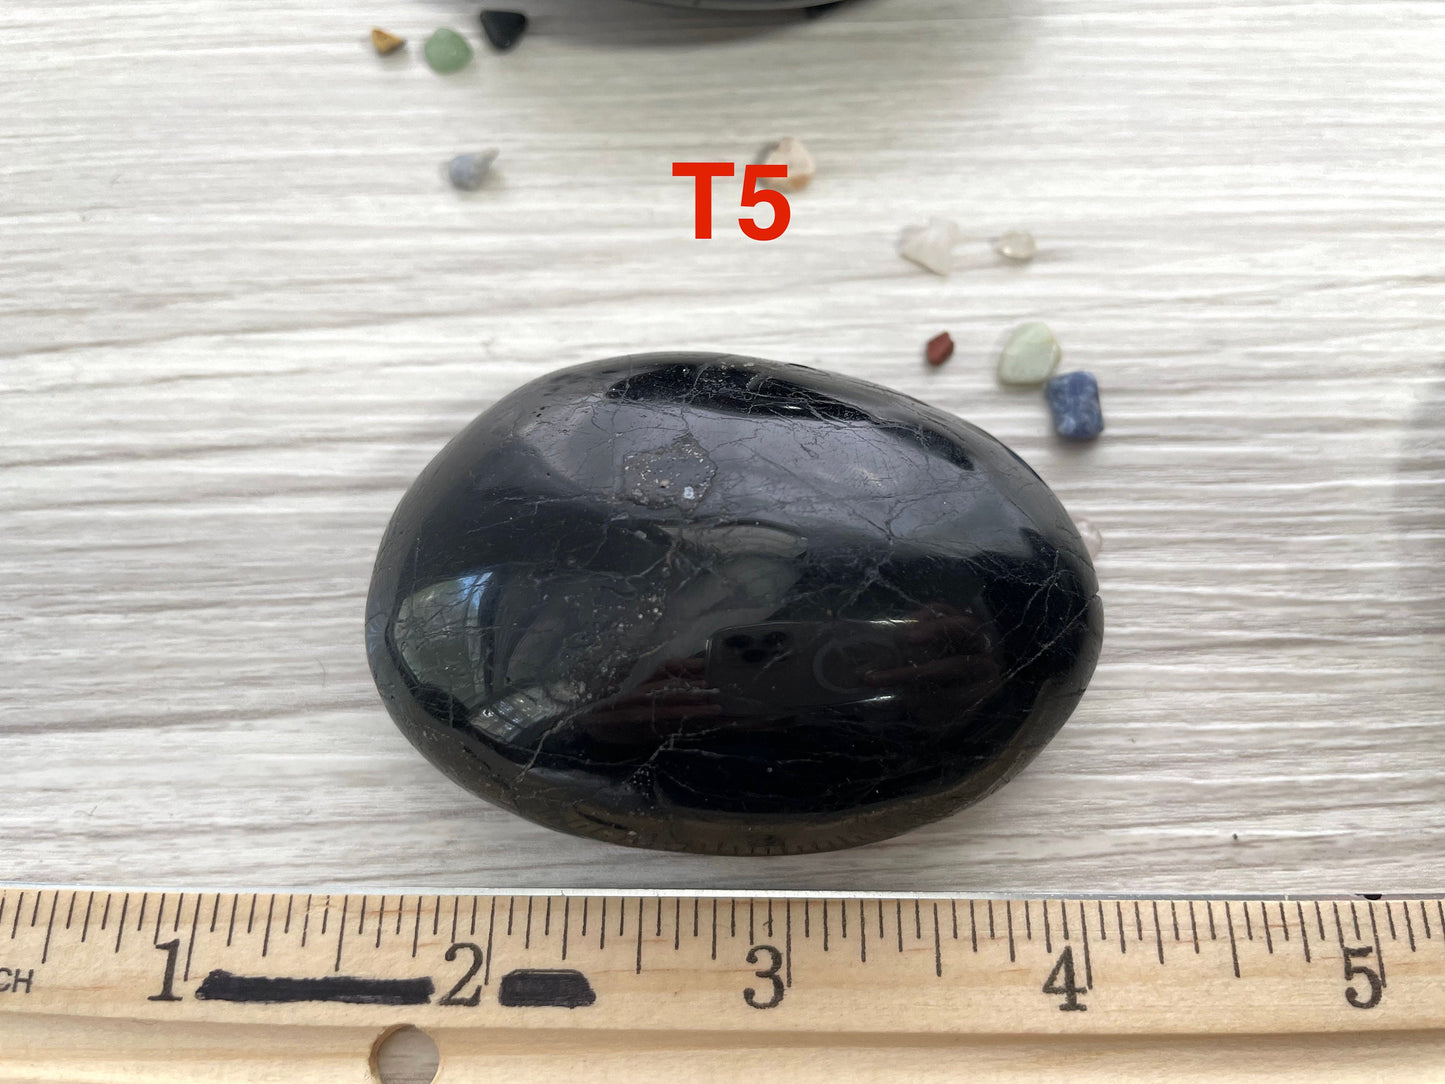 Black Tourmaline Large Pebbles